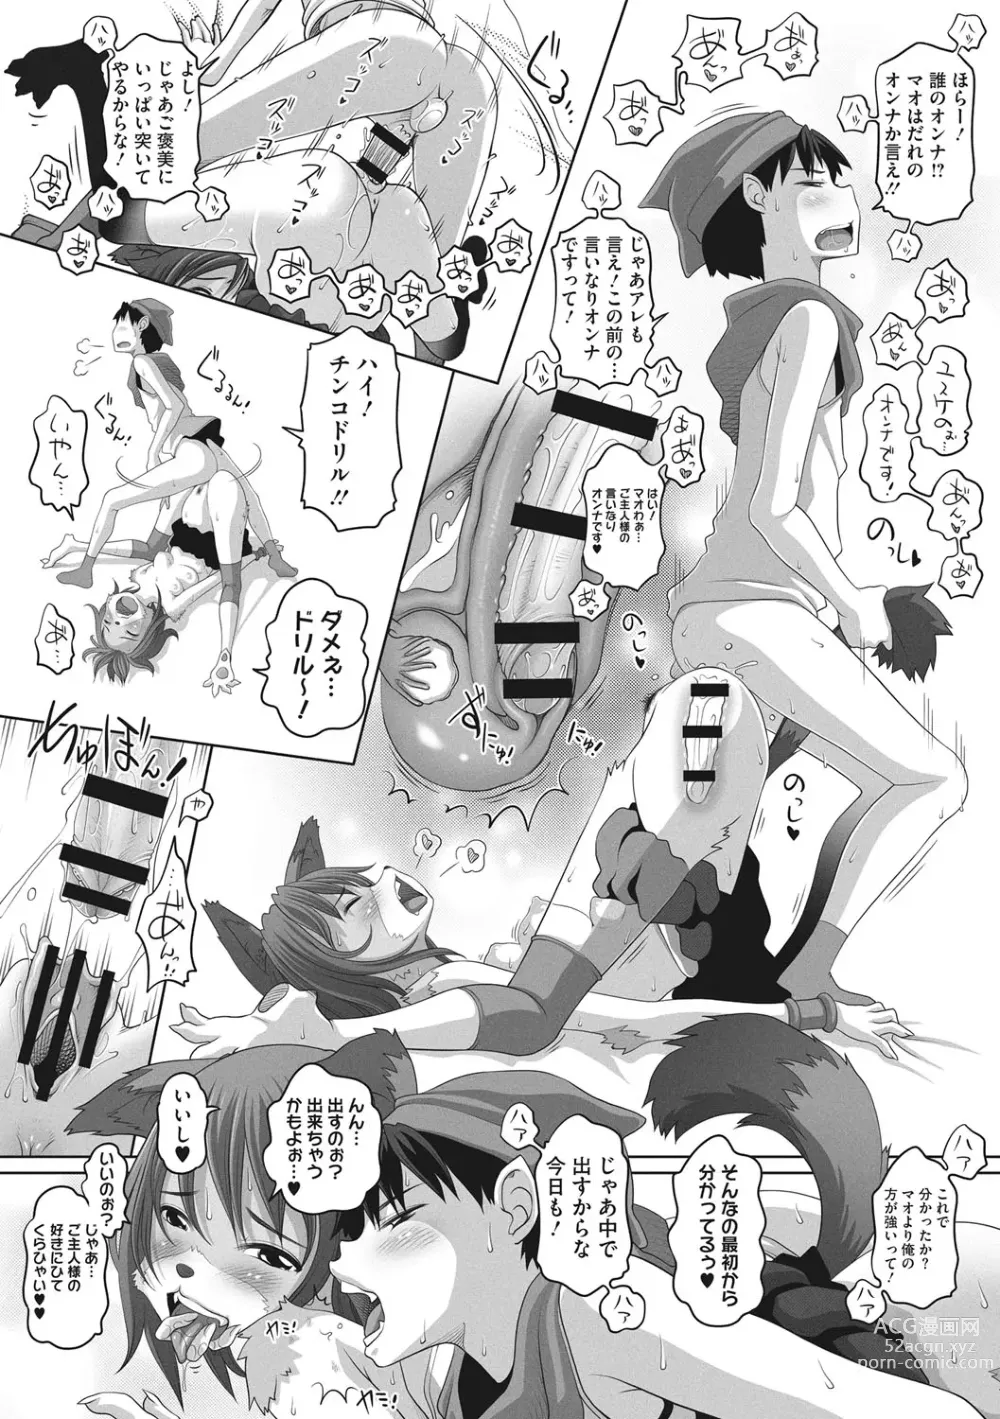 Page 173 of manga Namaiki-mori no 3 S